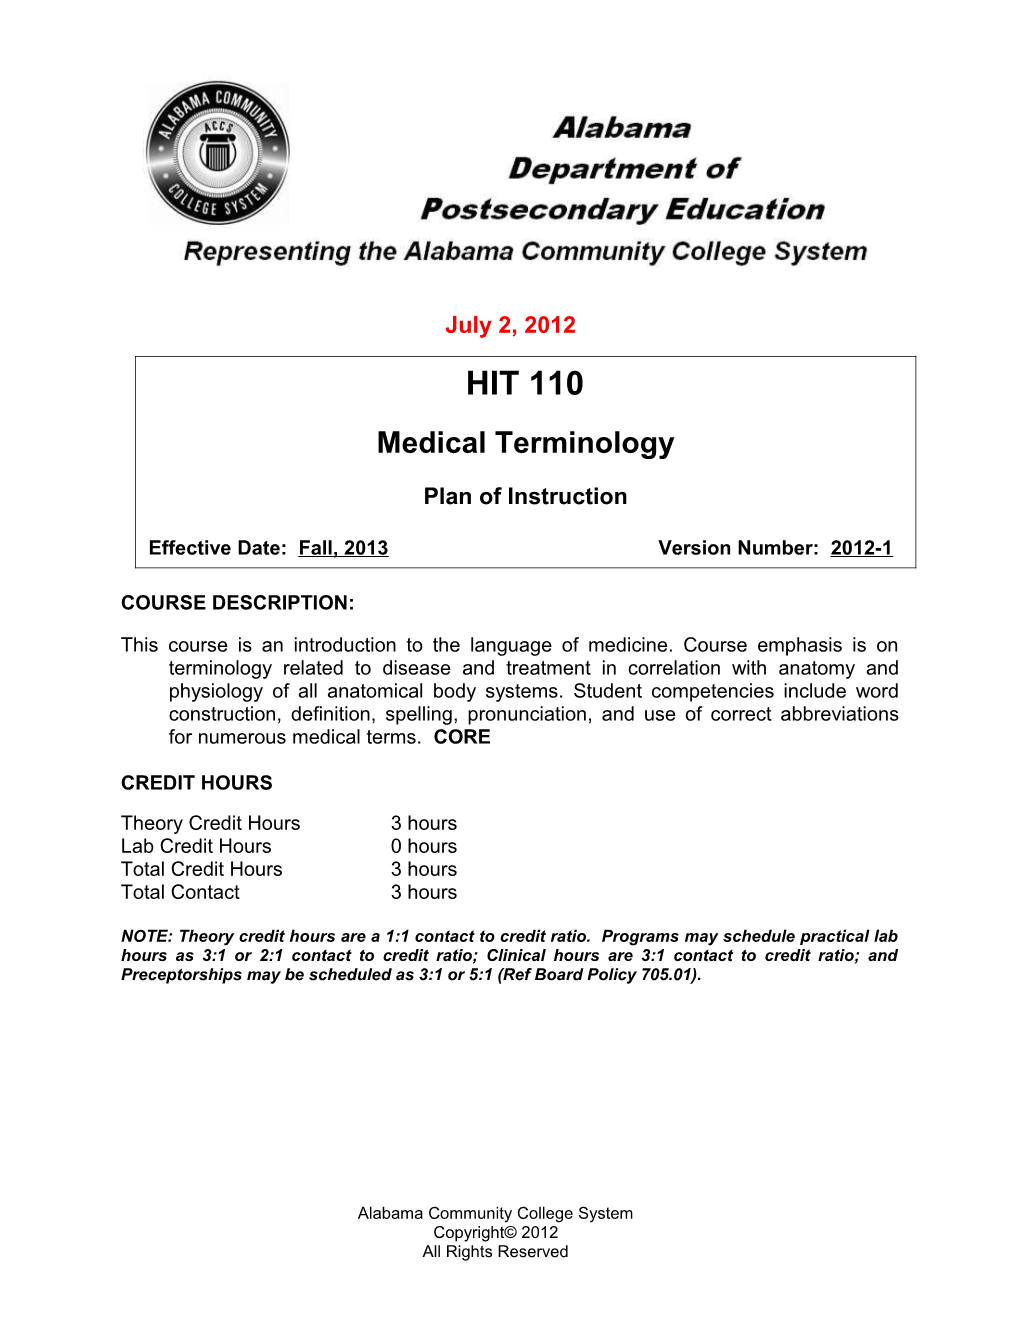 Medical Terminology HIT 110